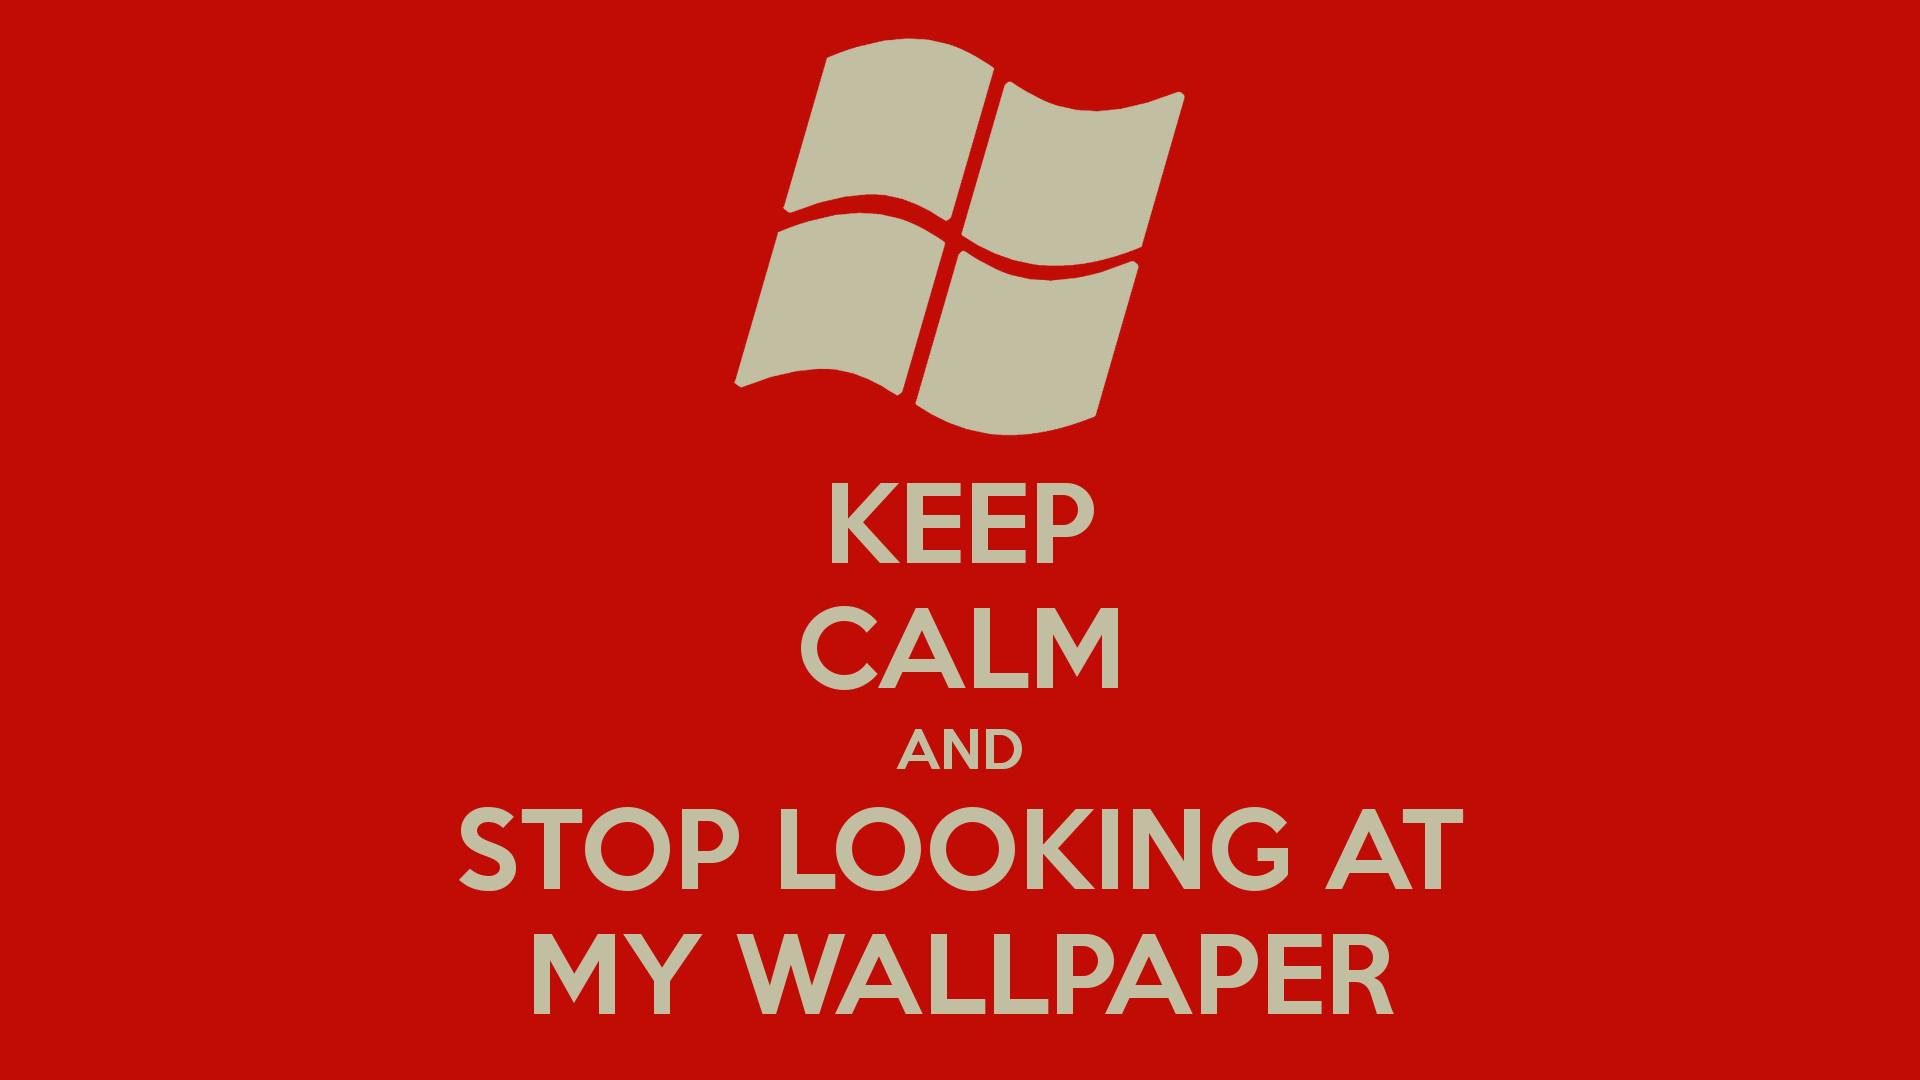 Keep Calm Wallpaper